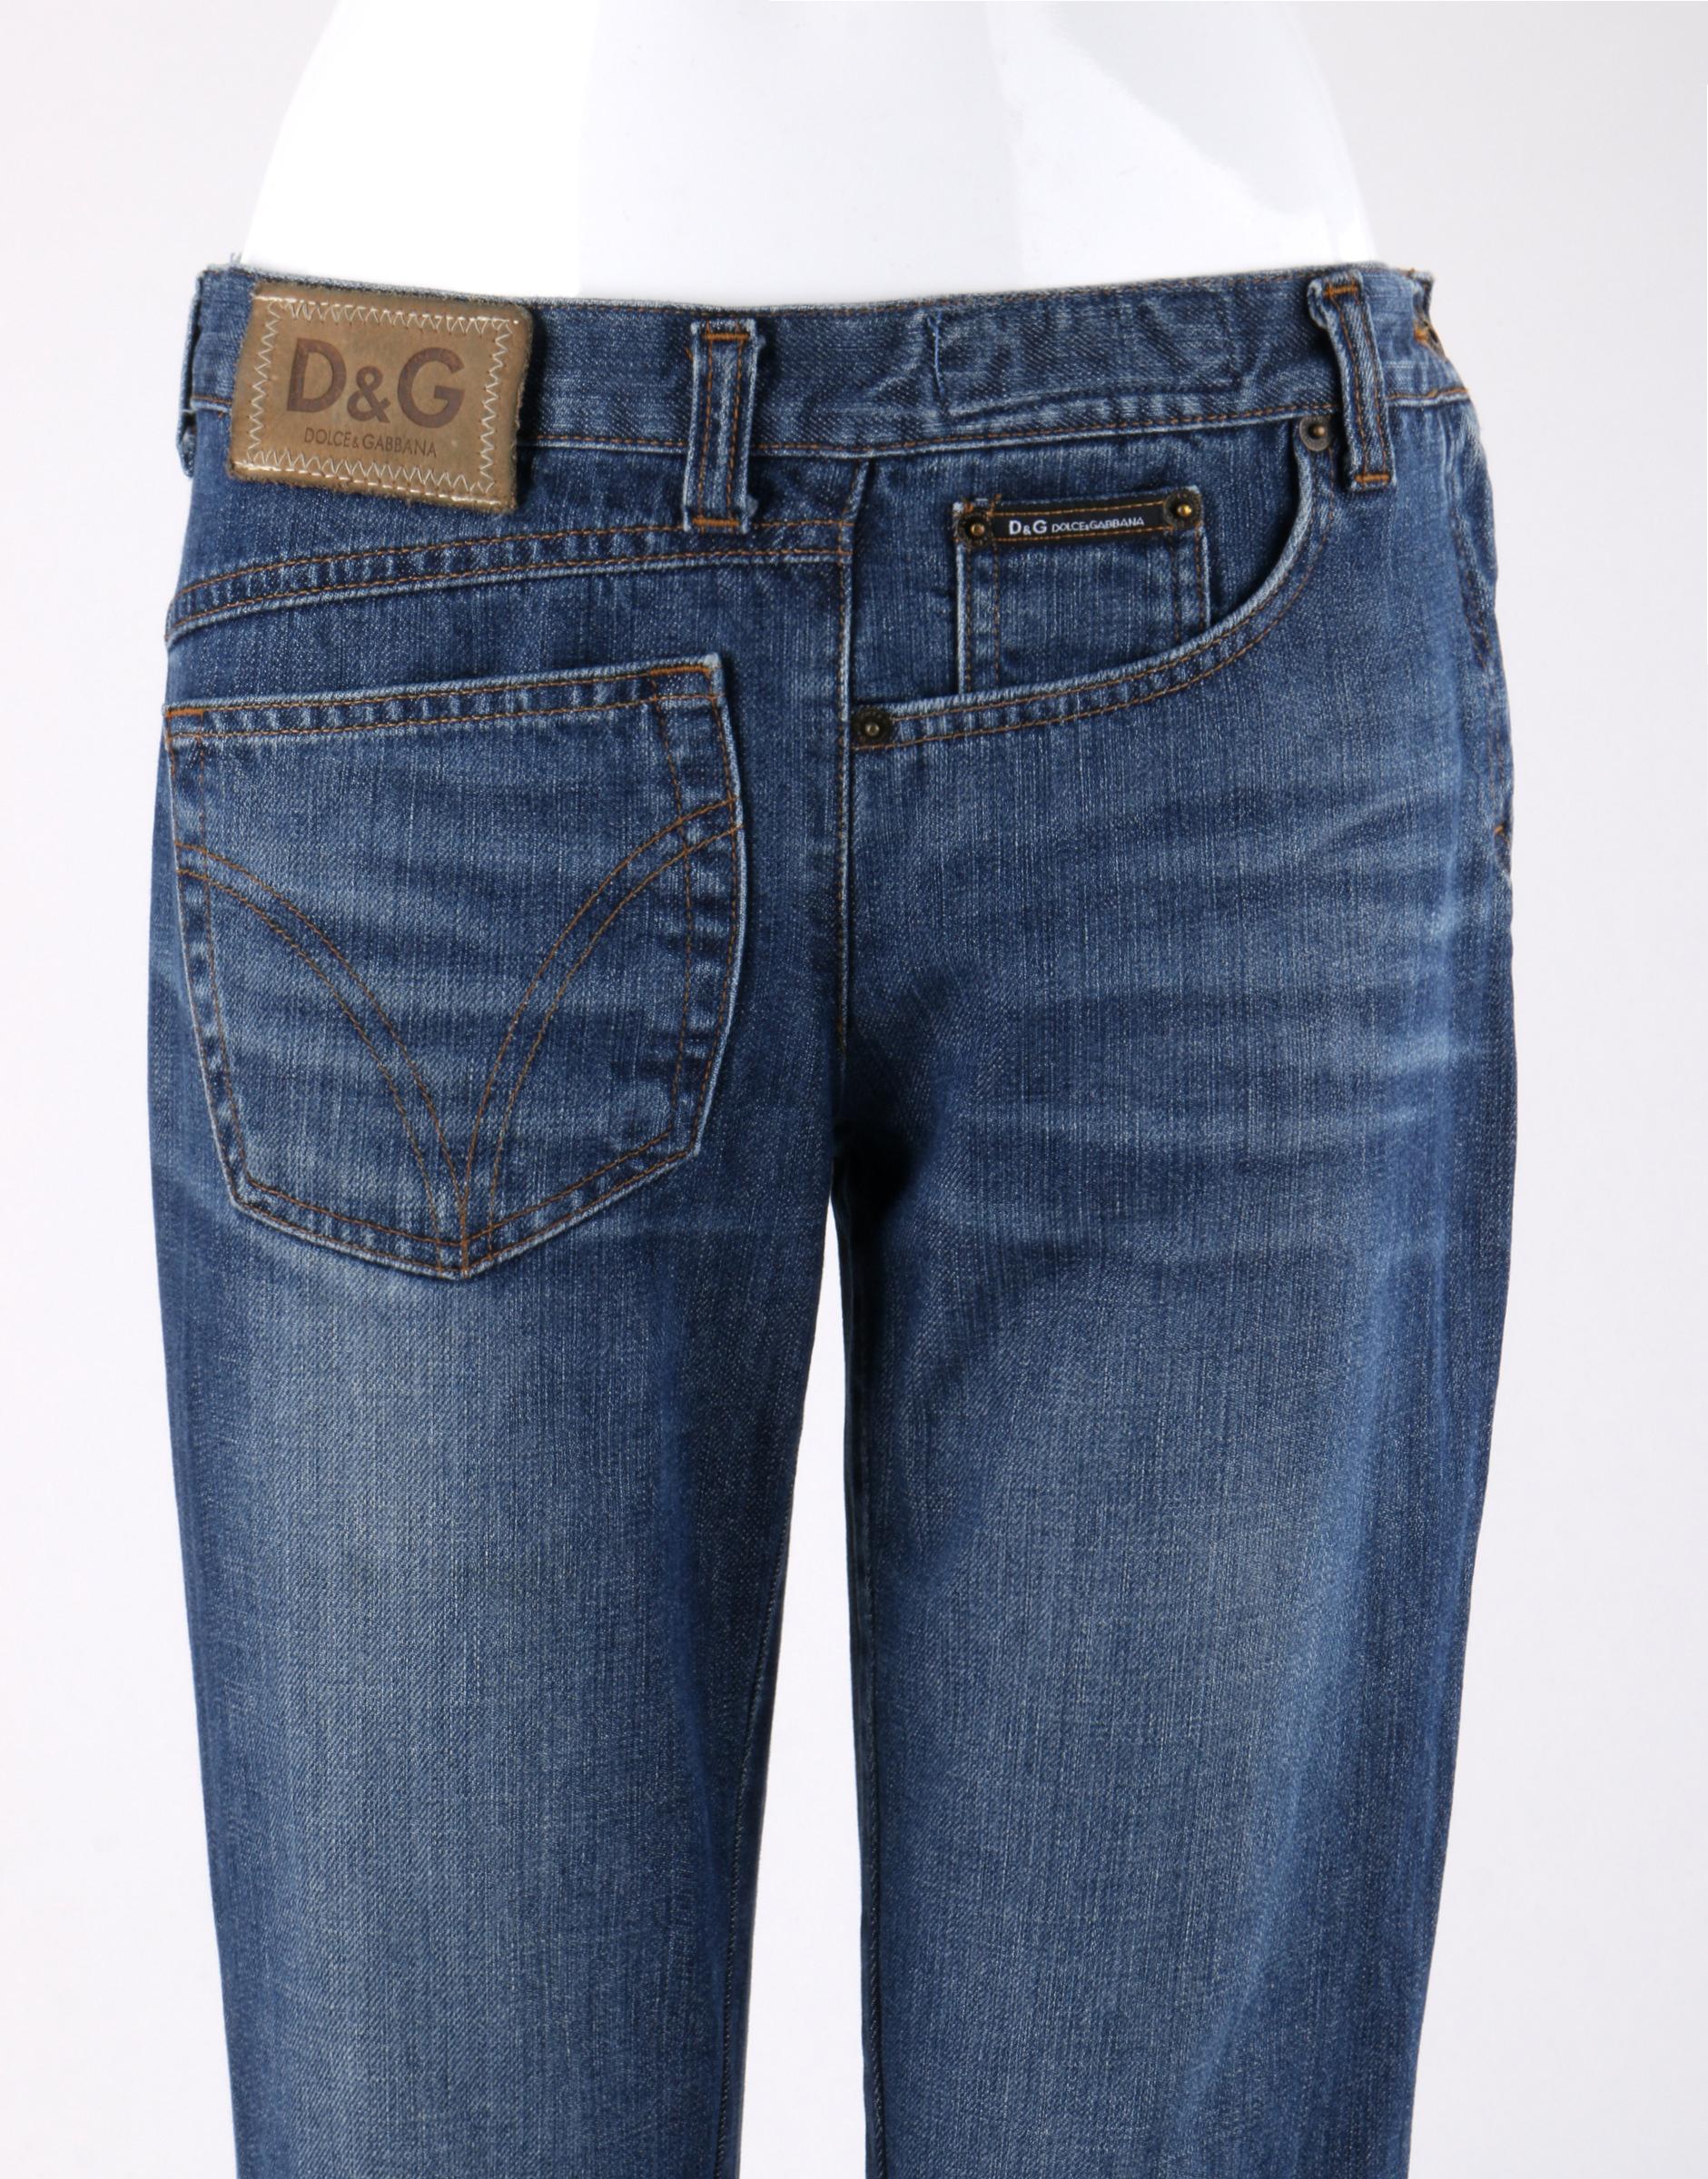 DOLCE & GABBANA c.2000's Five Pocket Sideways Avant Garde Straight Leg Jeans

Circa: Early 2000's  
Brand / Manufacturer: Dolce & Gabbana
Designer: Dominico Dolce & Stefan Gabbana
Style: Straight leg jeans
Color(s): Shades of blue (body); gold